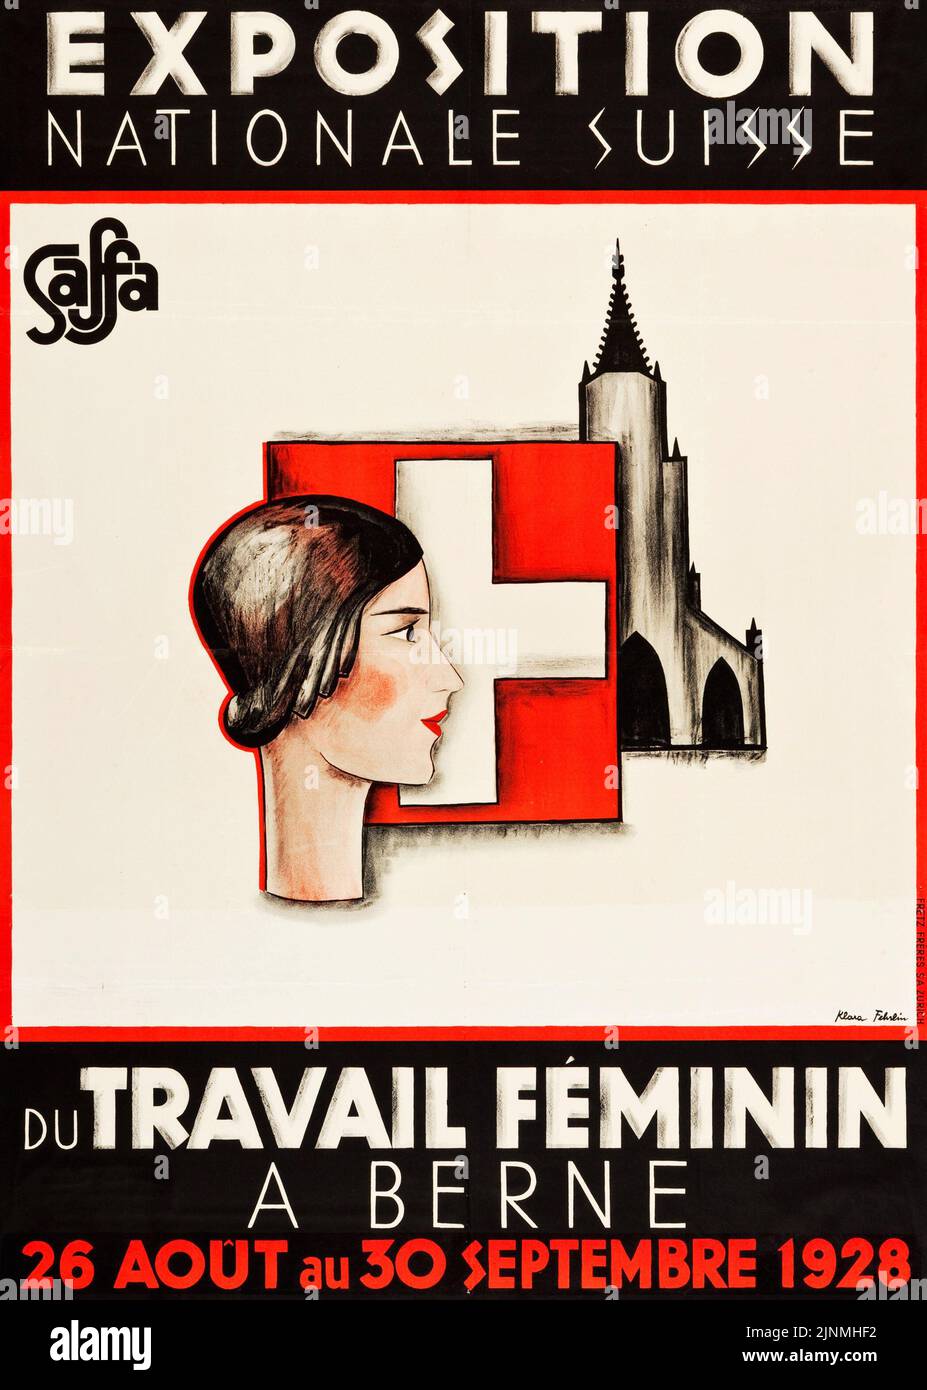 Ausstellung Nationale Suisse, Schweiz Reiseplakat. Du travail feminin a Berne. (Fretz Frère, S. A. Zürich, 1928) Stockfoto